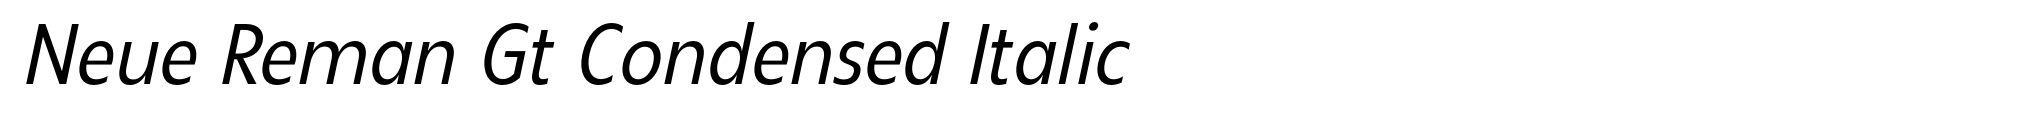 Neue Reman Gt Condensed Italic image